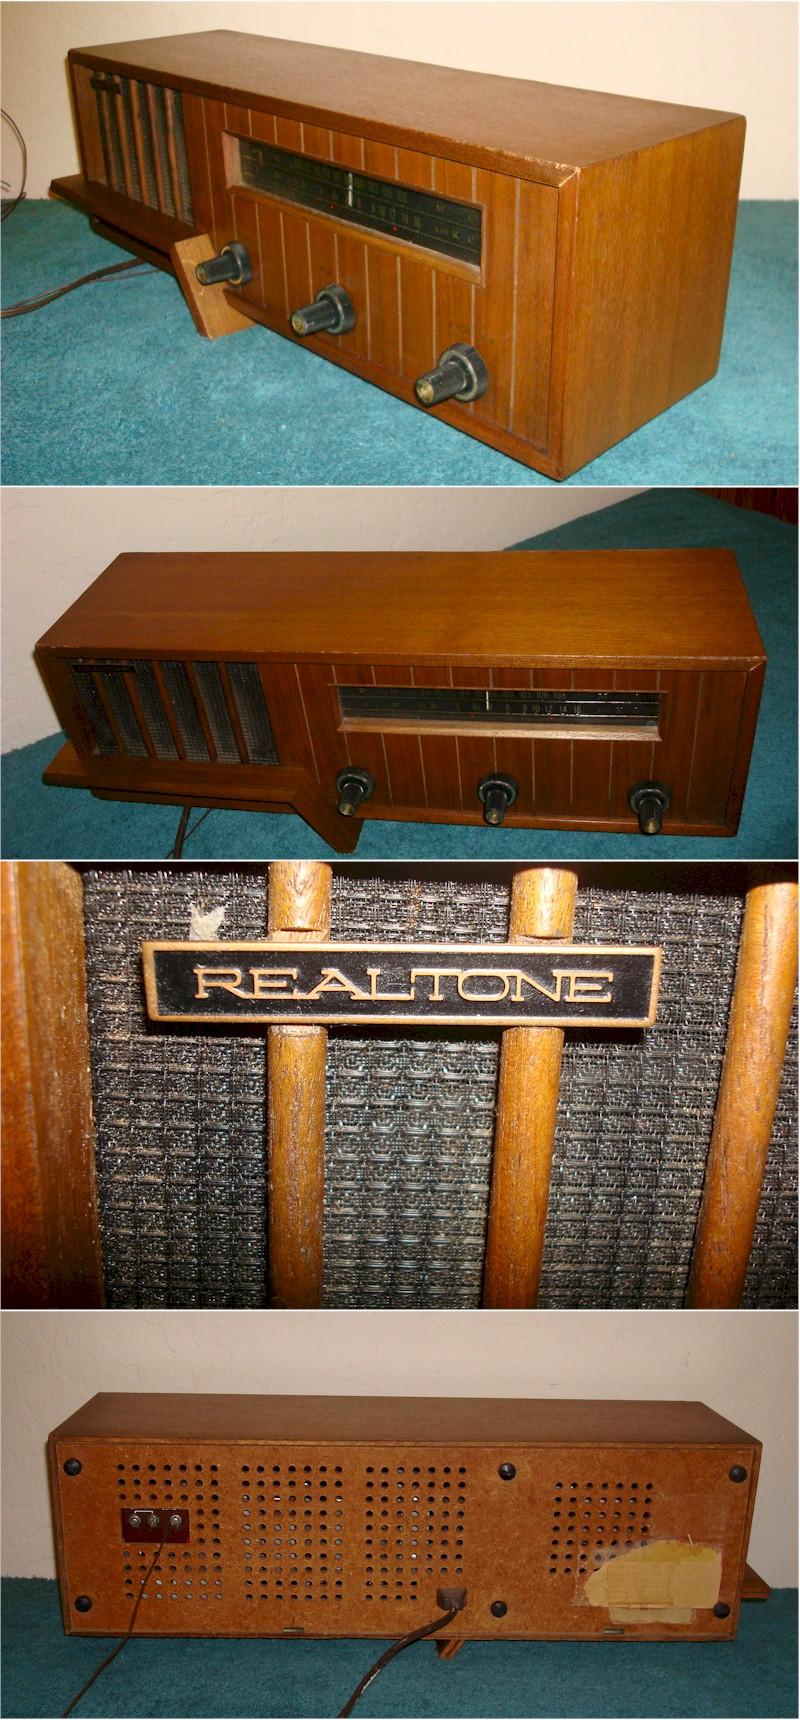 Realtone VT-2652 (1963)